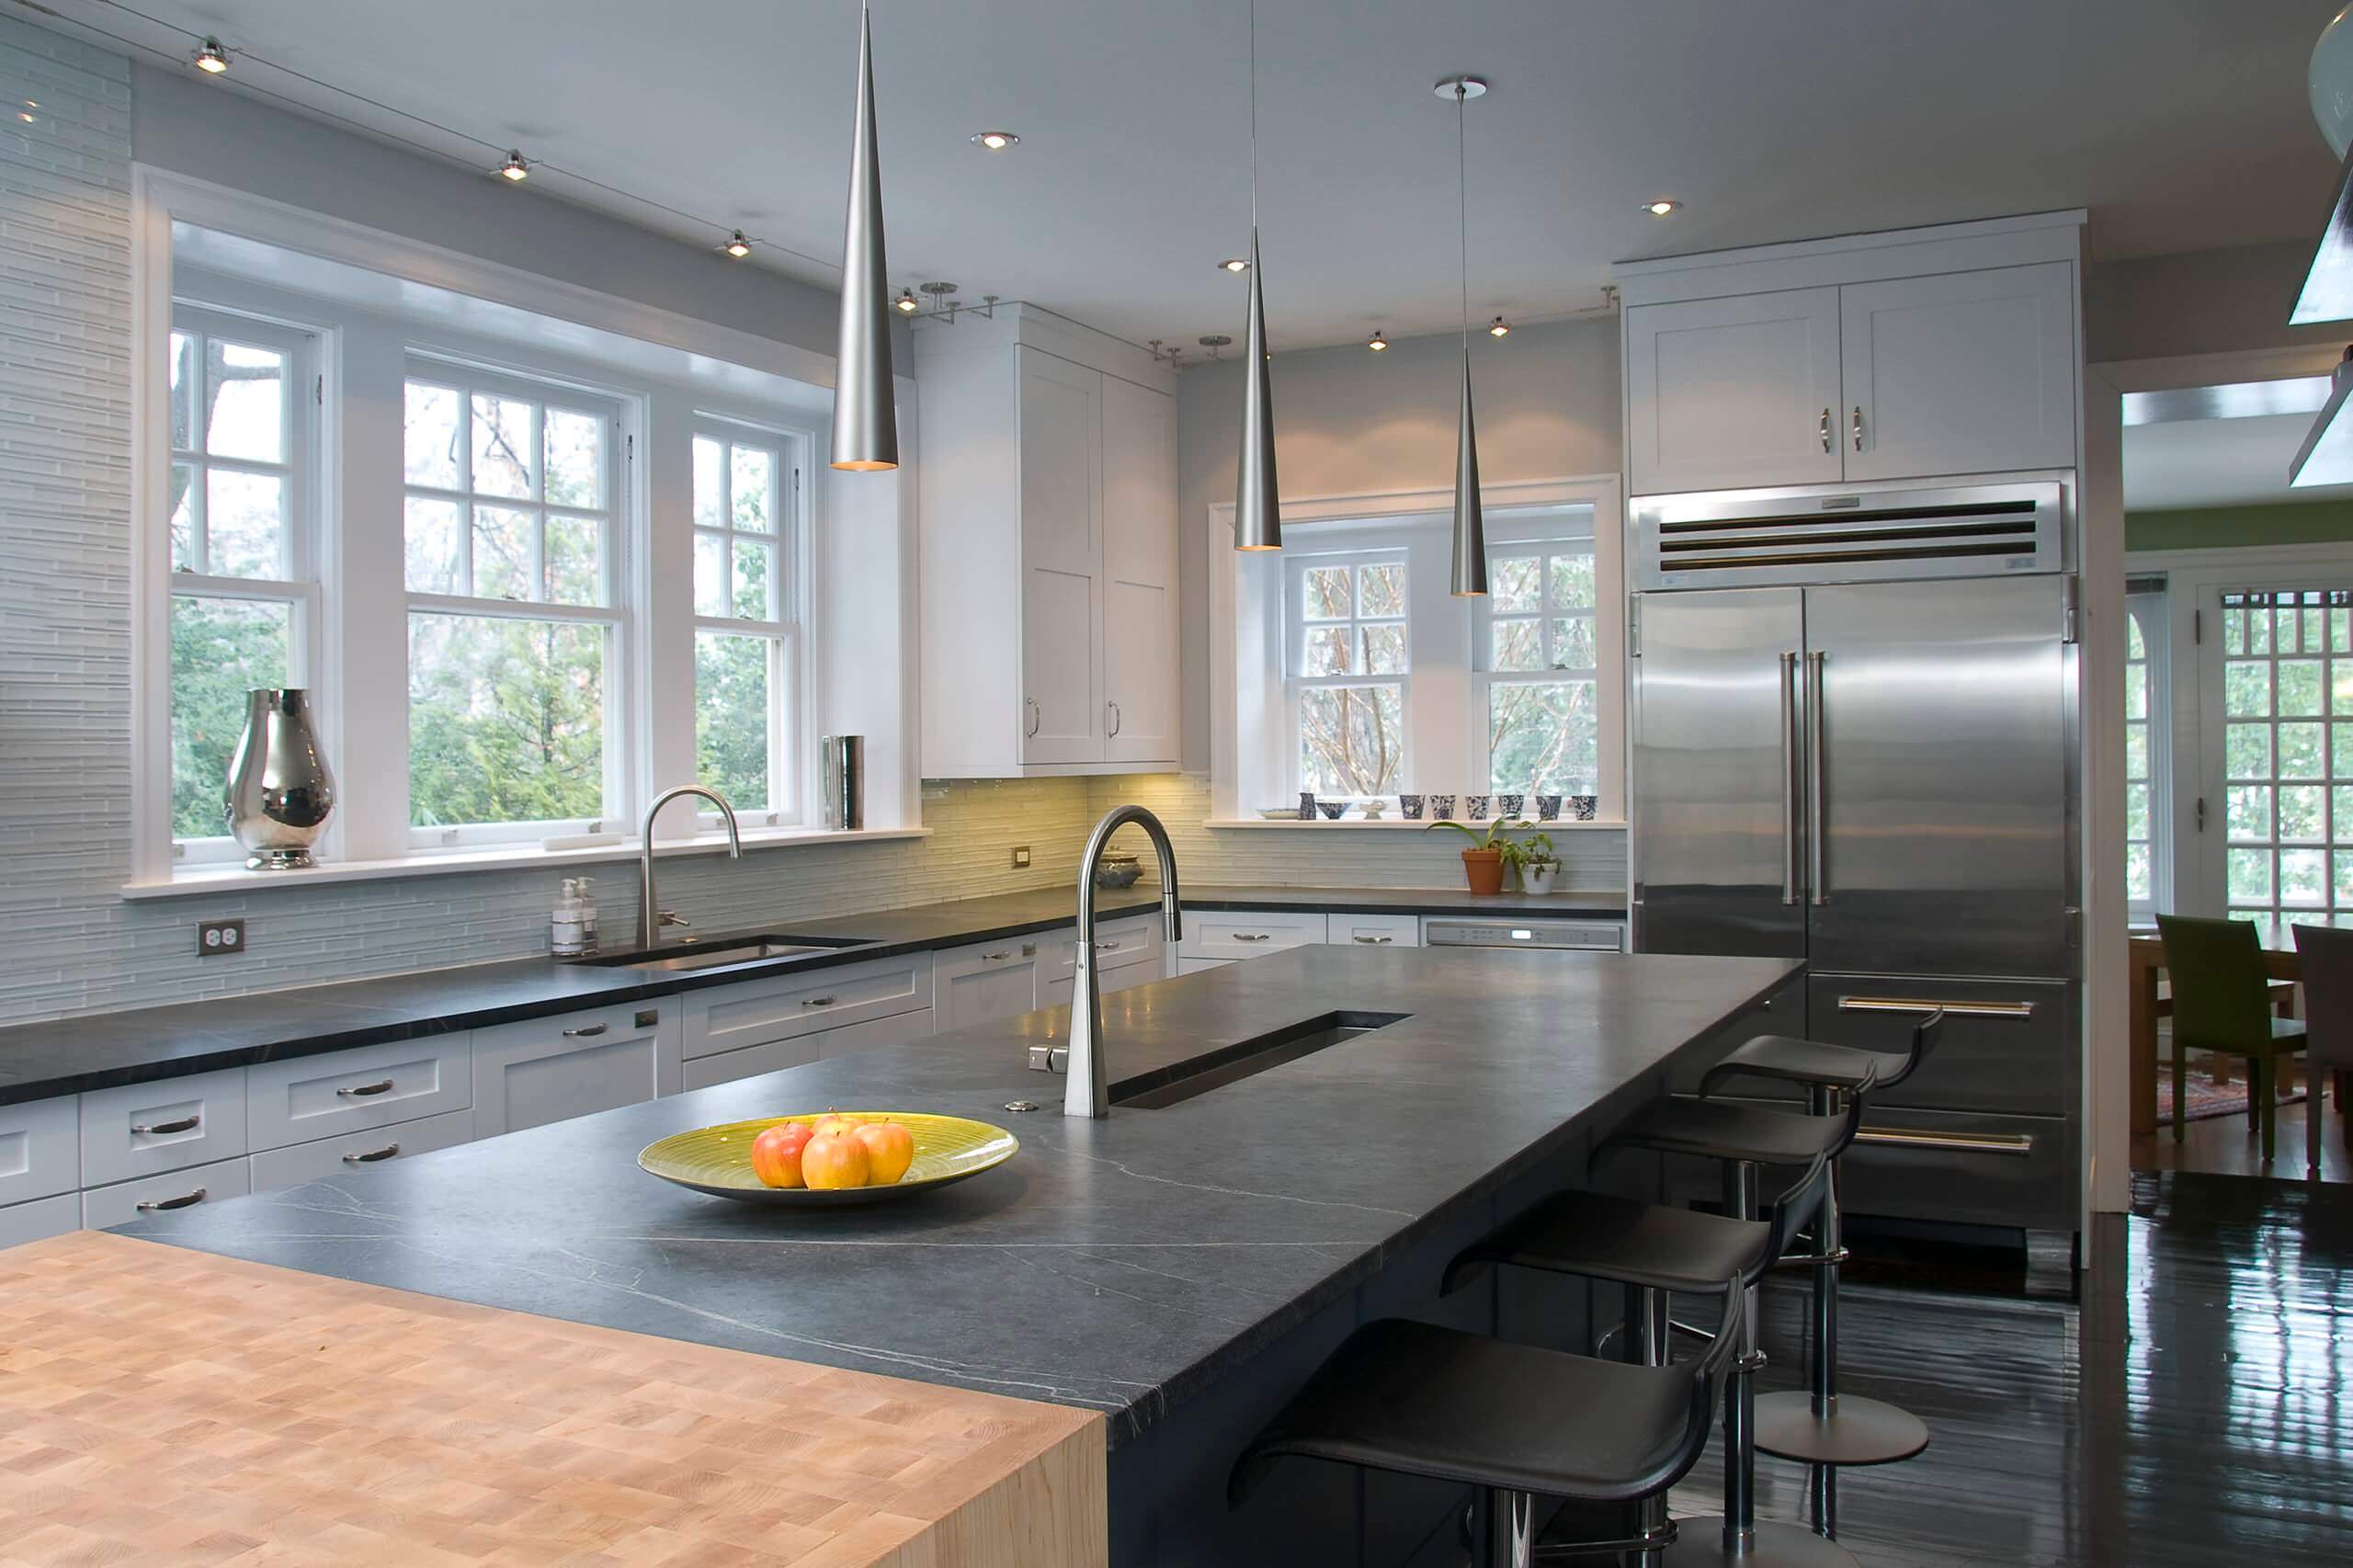 9 kitchen countertop ideas